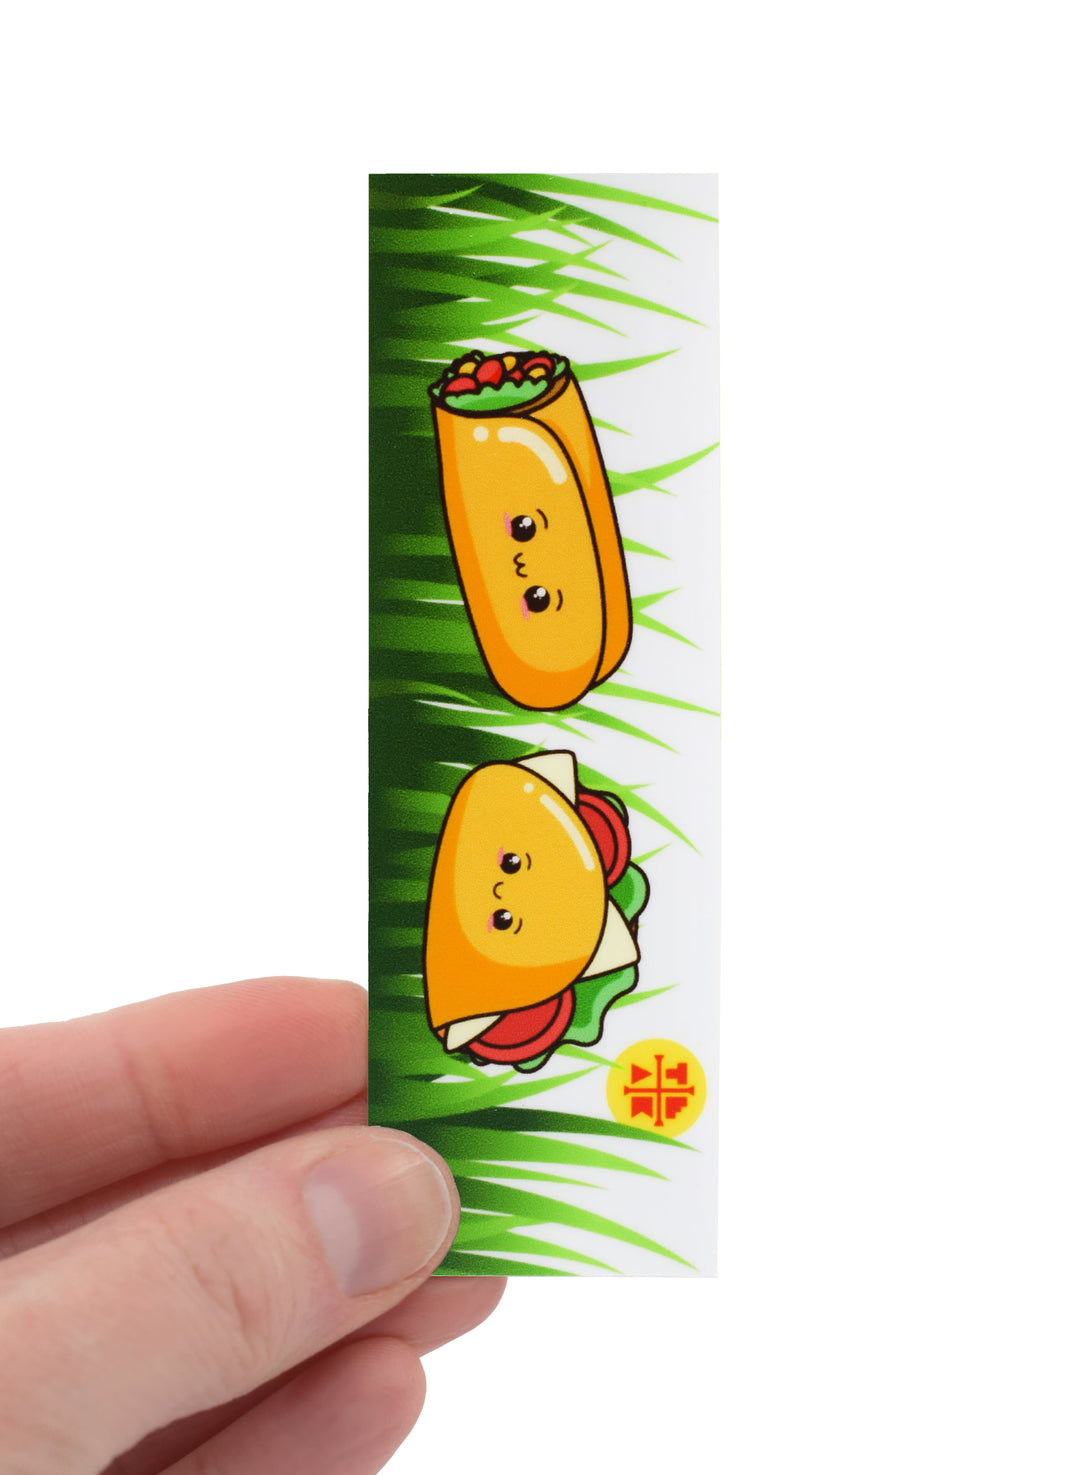 Teak Tuning "Happy Tacos" Deck Graphic Wrap - 35mm x 110mm